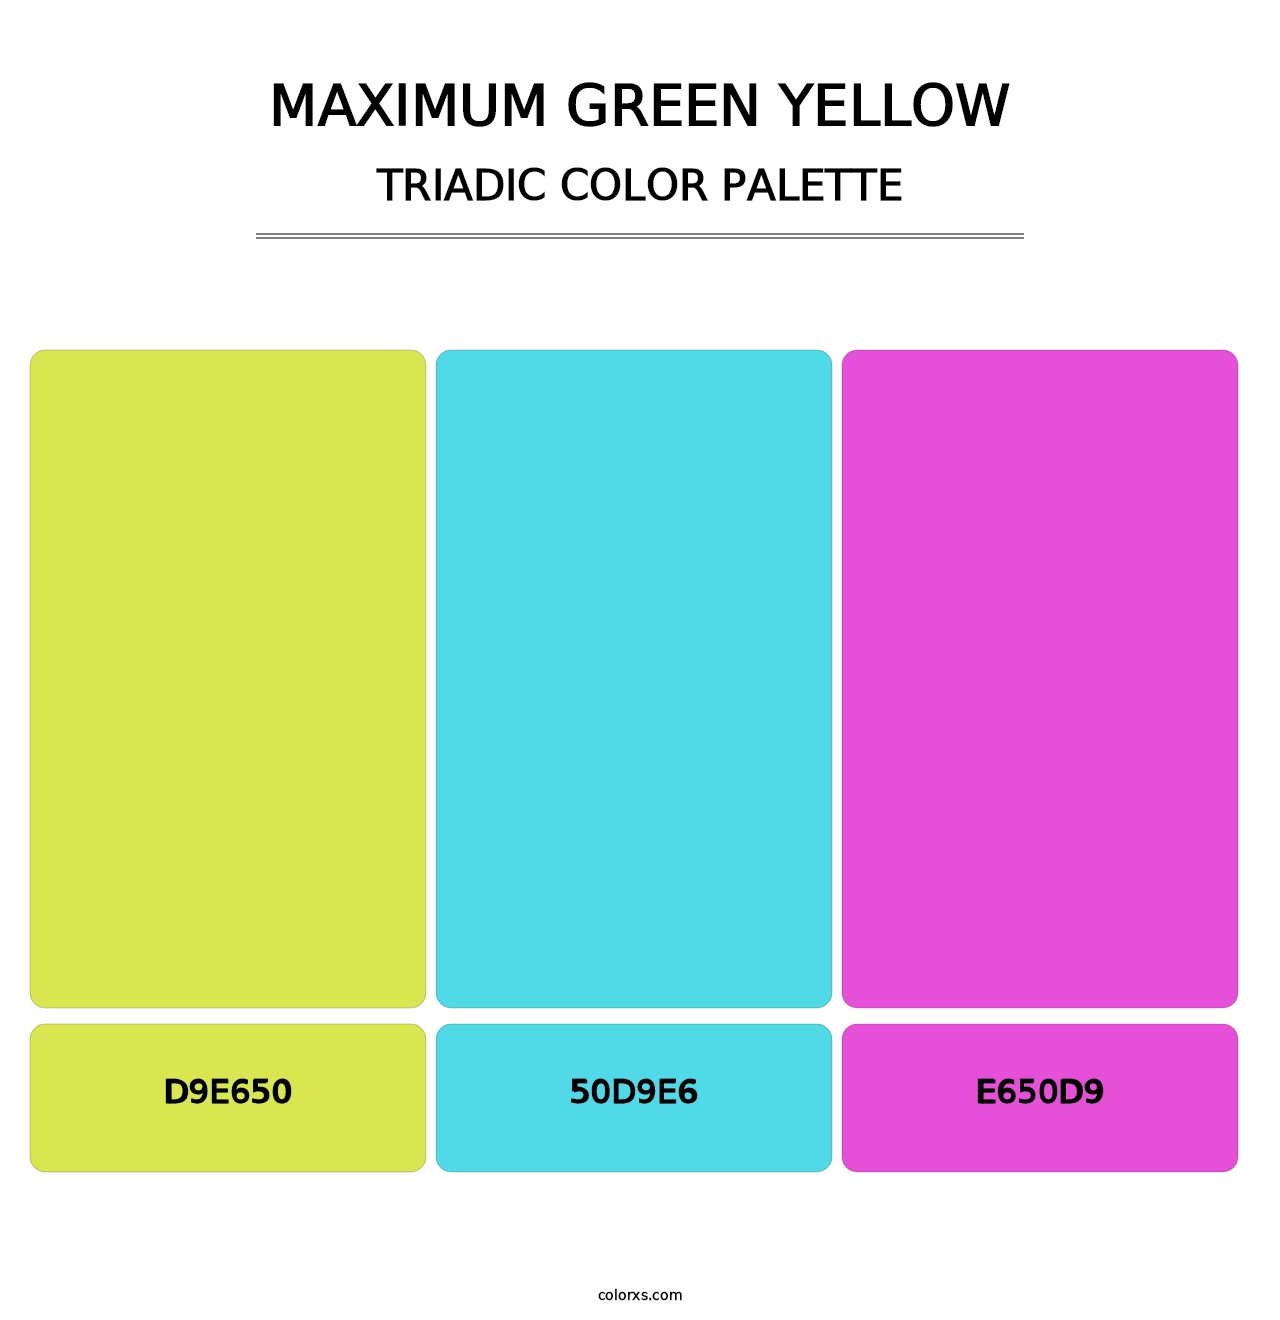 Maximum Green Yellow - Triadic Color Palette